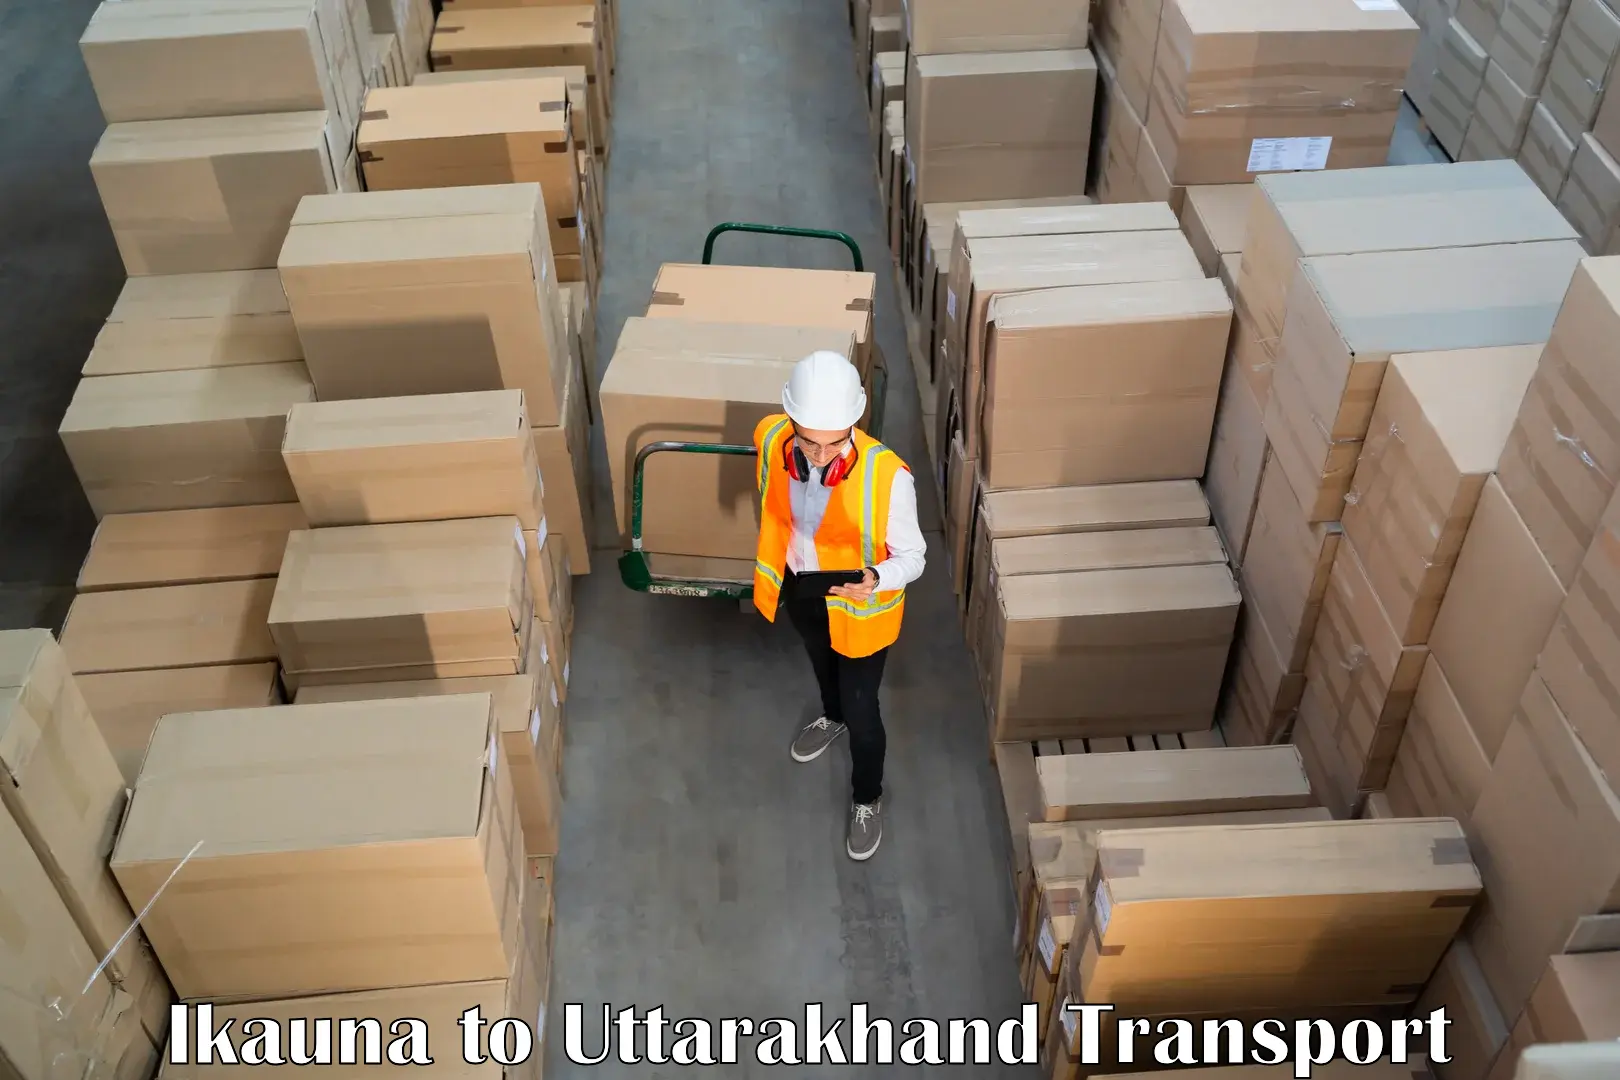 Shipping partner Ikauna to Joshimath